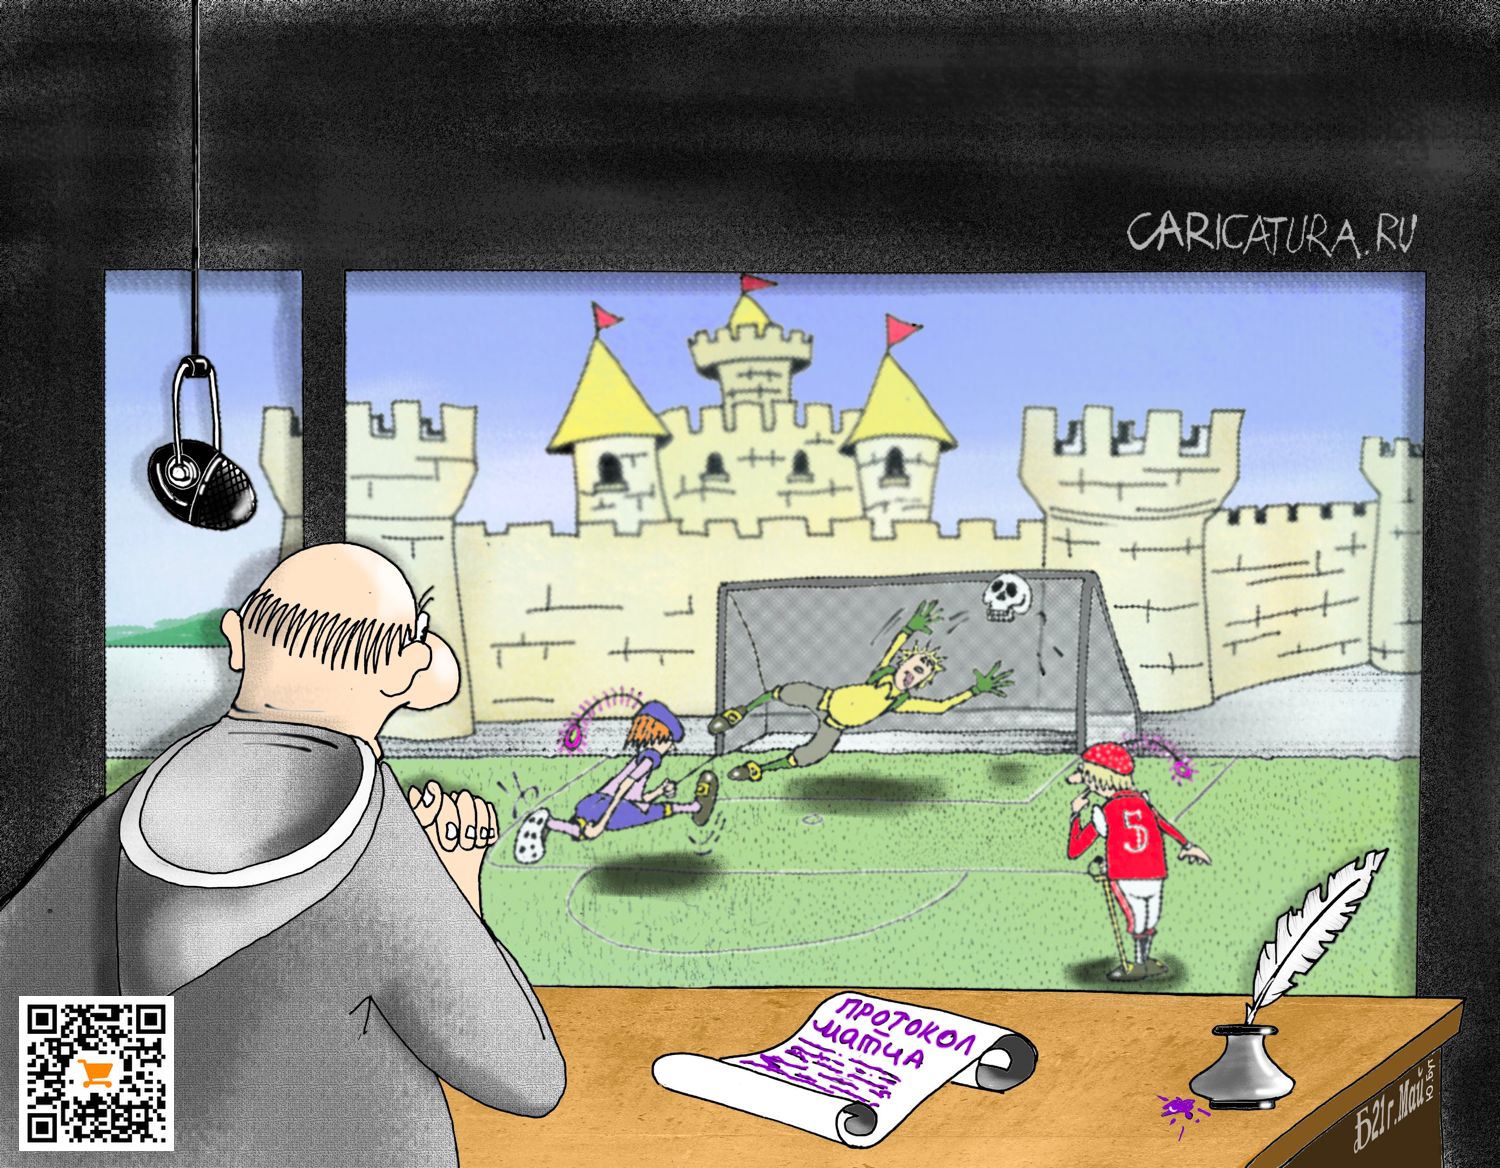 Карикатура "Про принцев гадских", Борис Демин